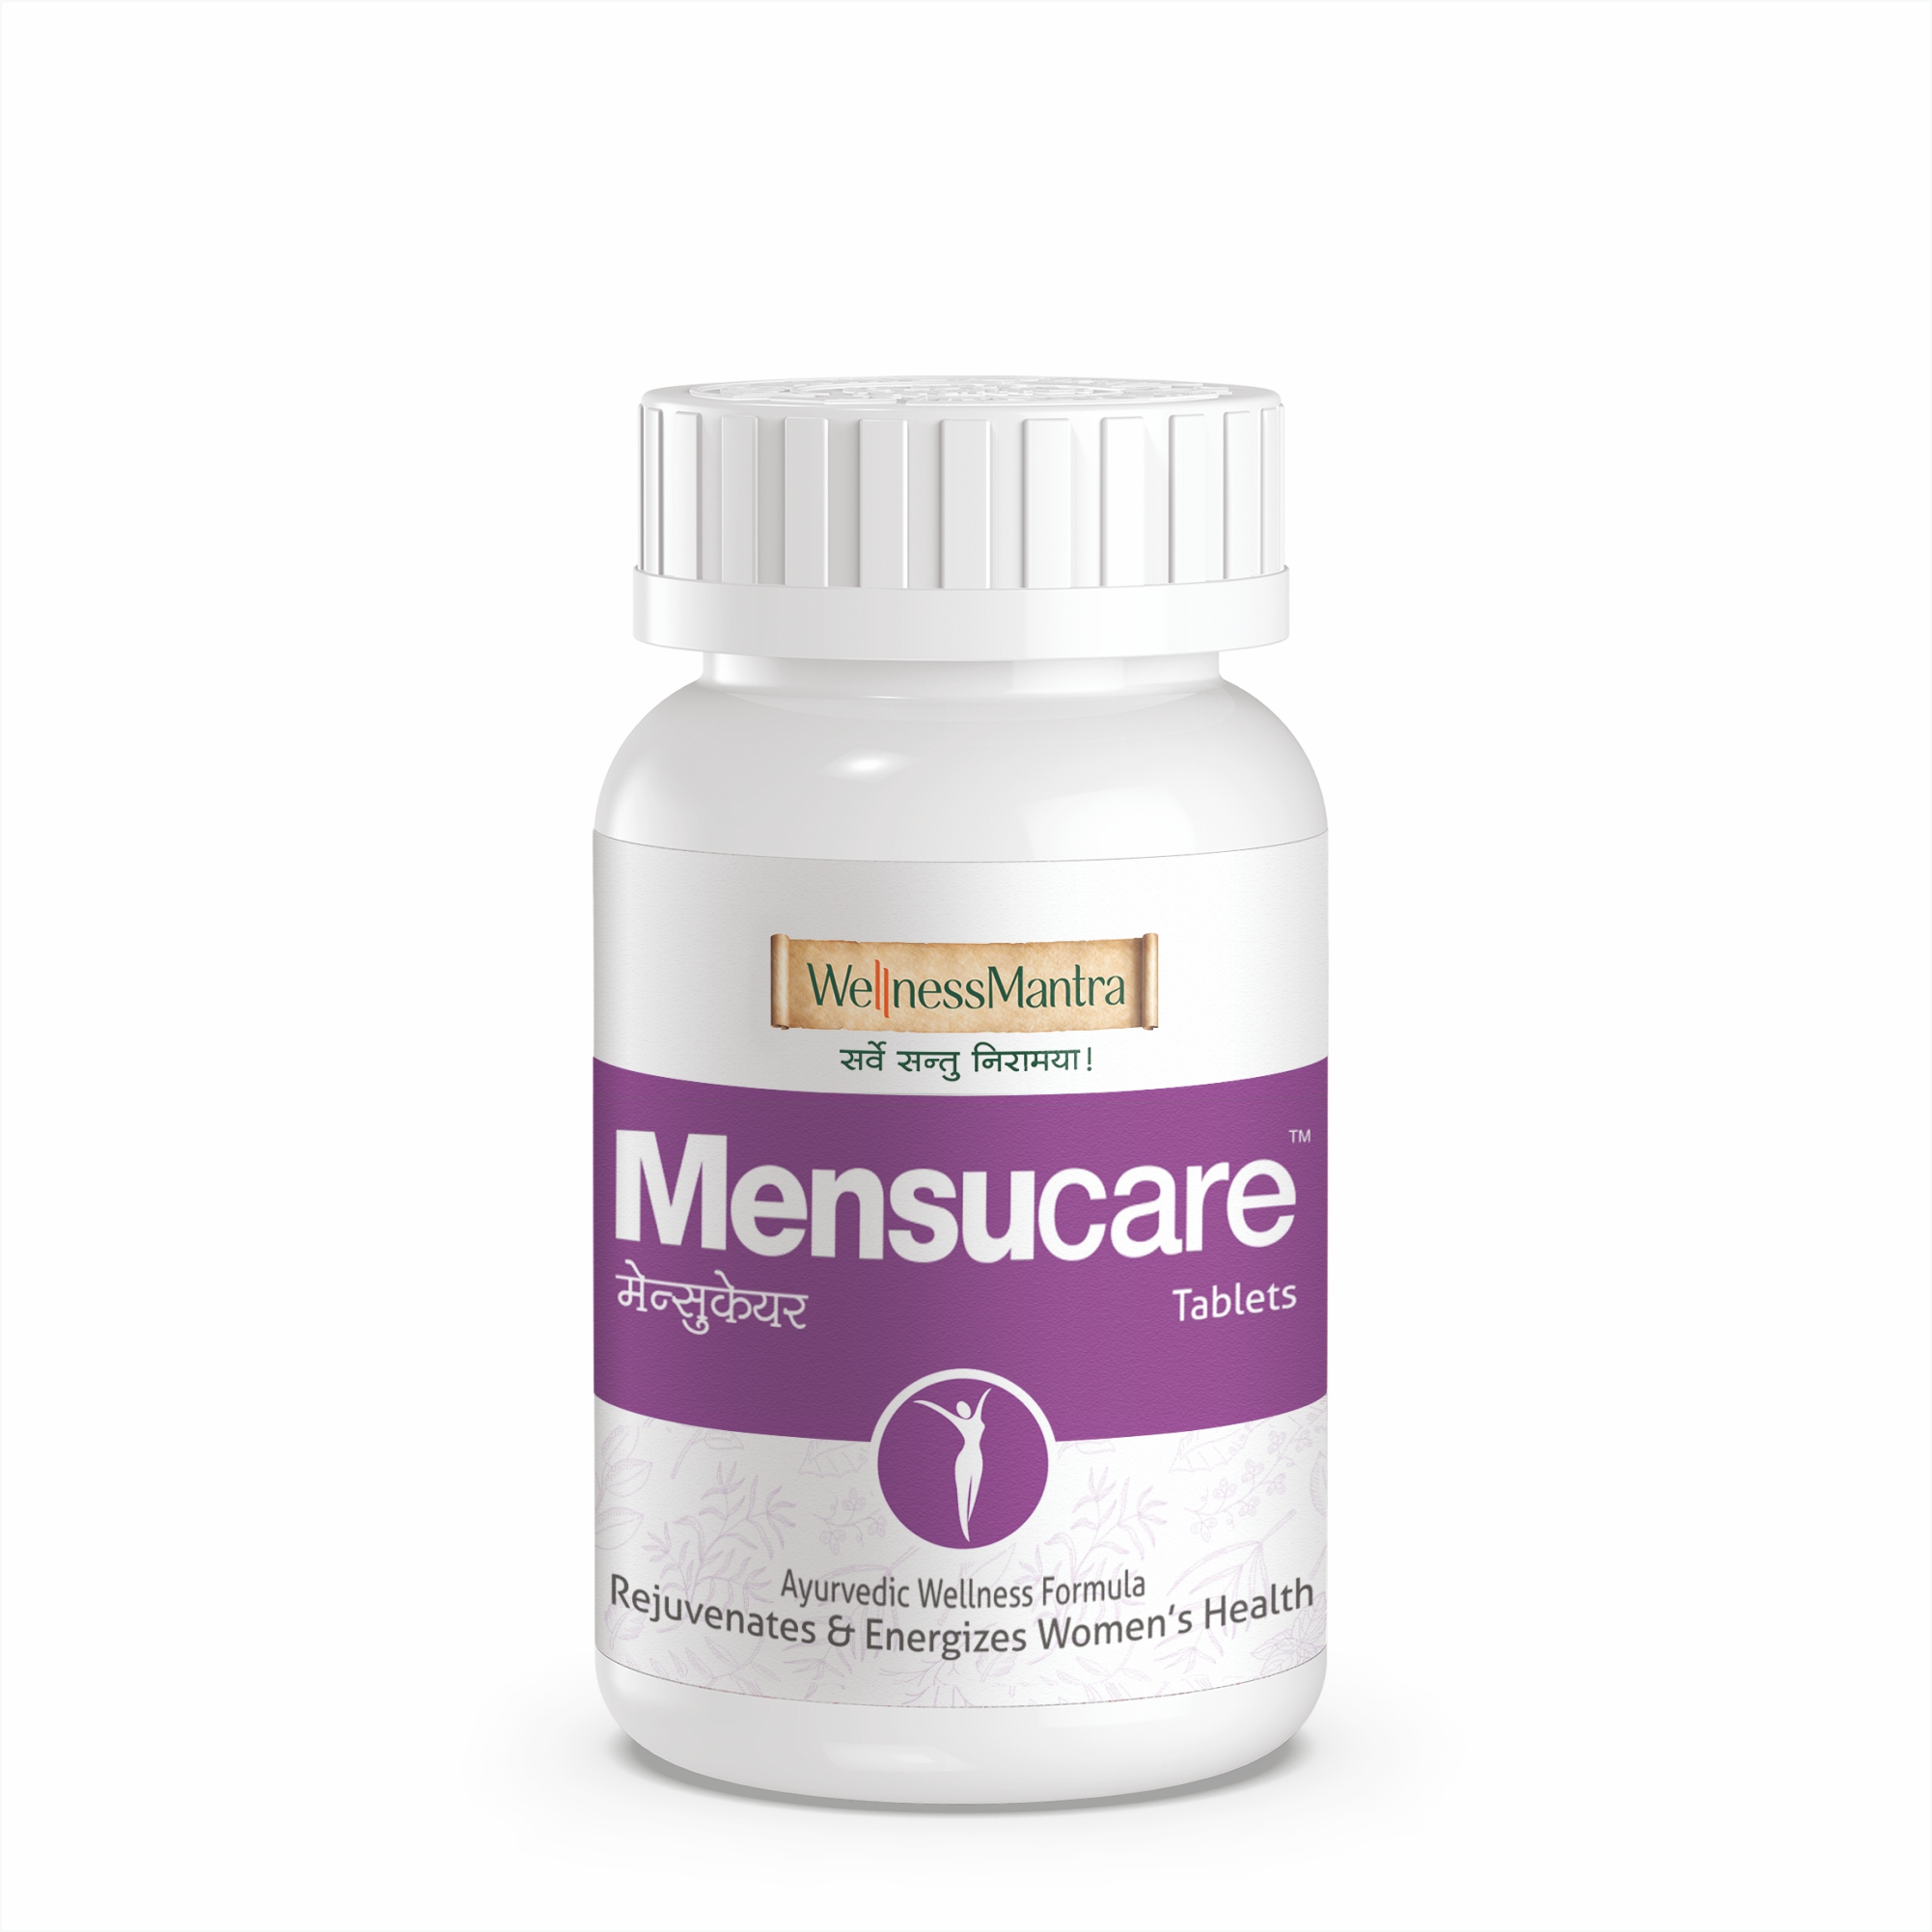 Buy Wellness Mantra Mensucare Tablets at Best Price Online